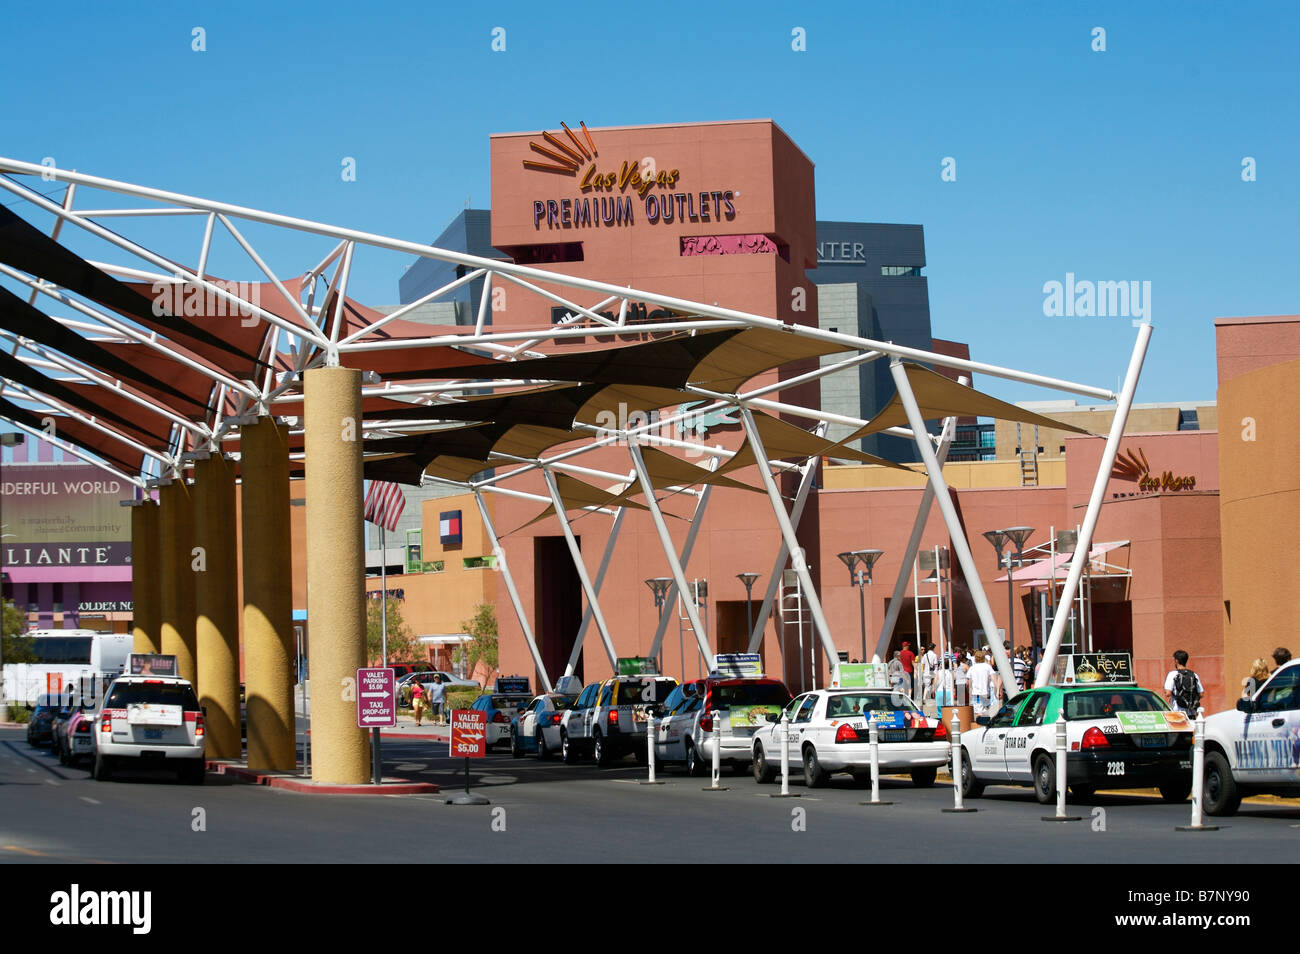 Shoe Palace at Las Vegas North Premium Outlets® - A Shopping Center in Las  Vegas, NV - A Simon Property